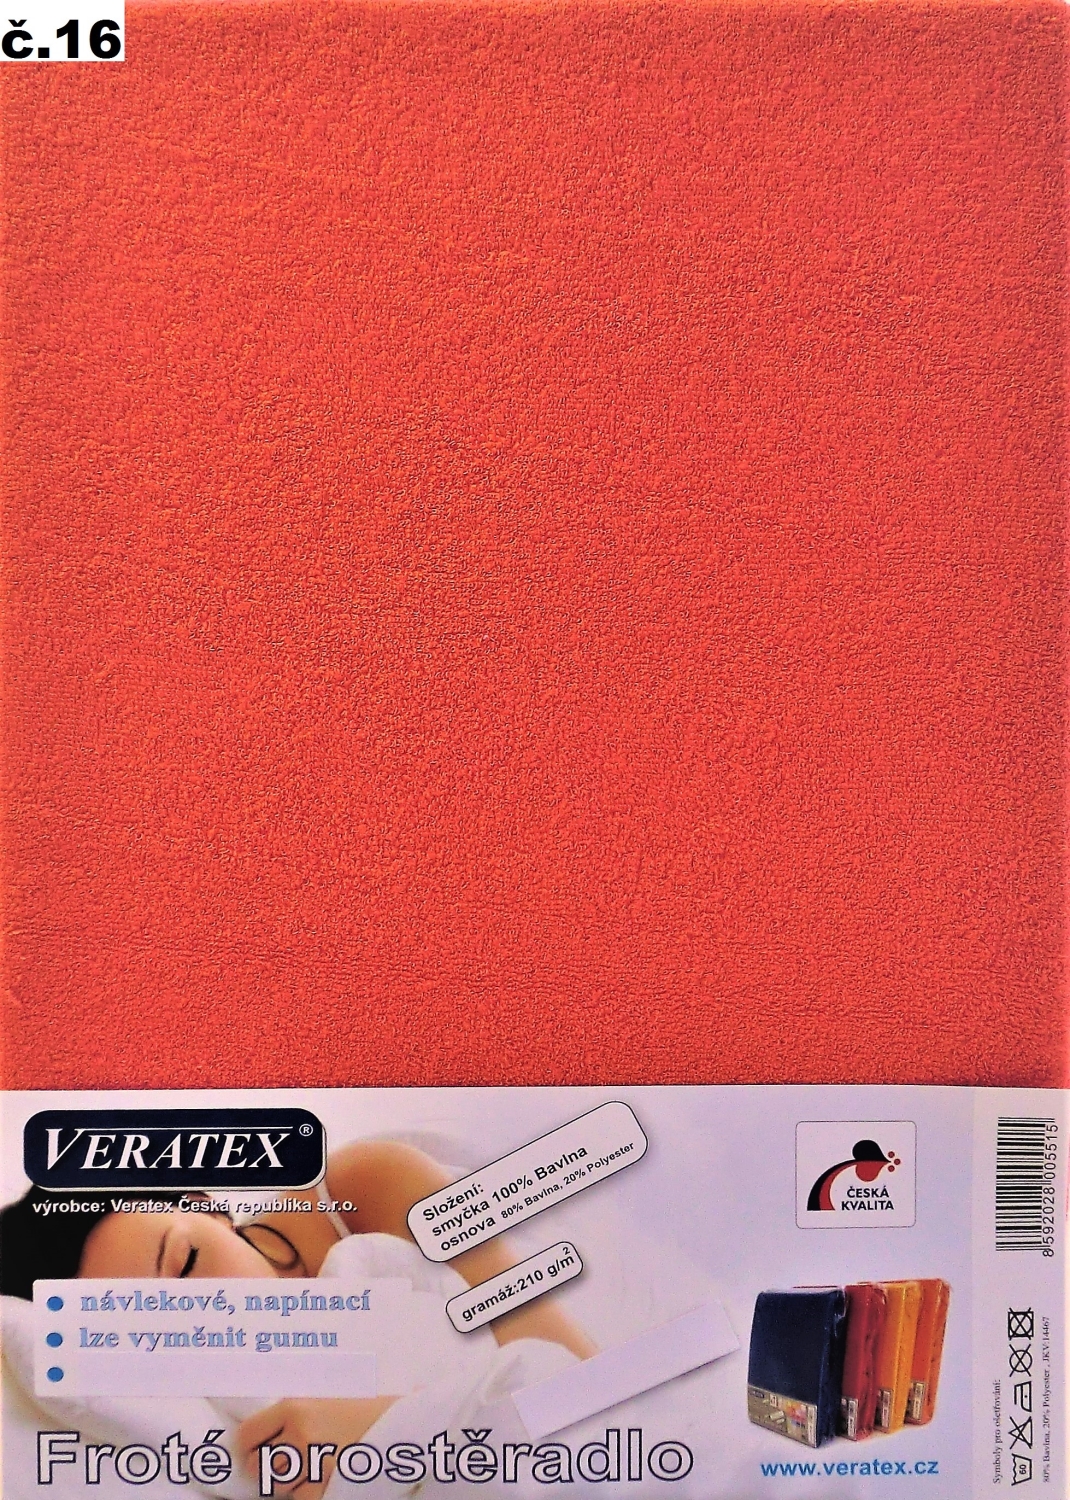 Veratex Froté prostěradlo jednolůžko 80x200/25cm (č.16 malinové)